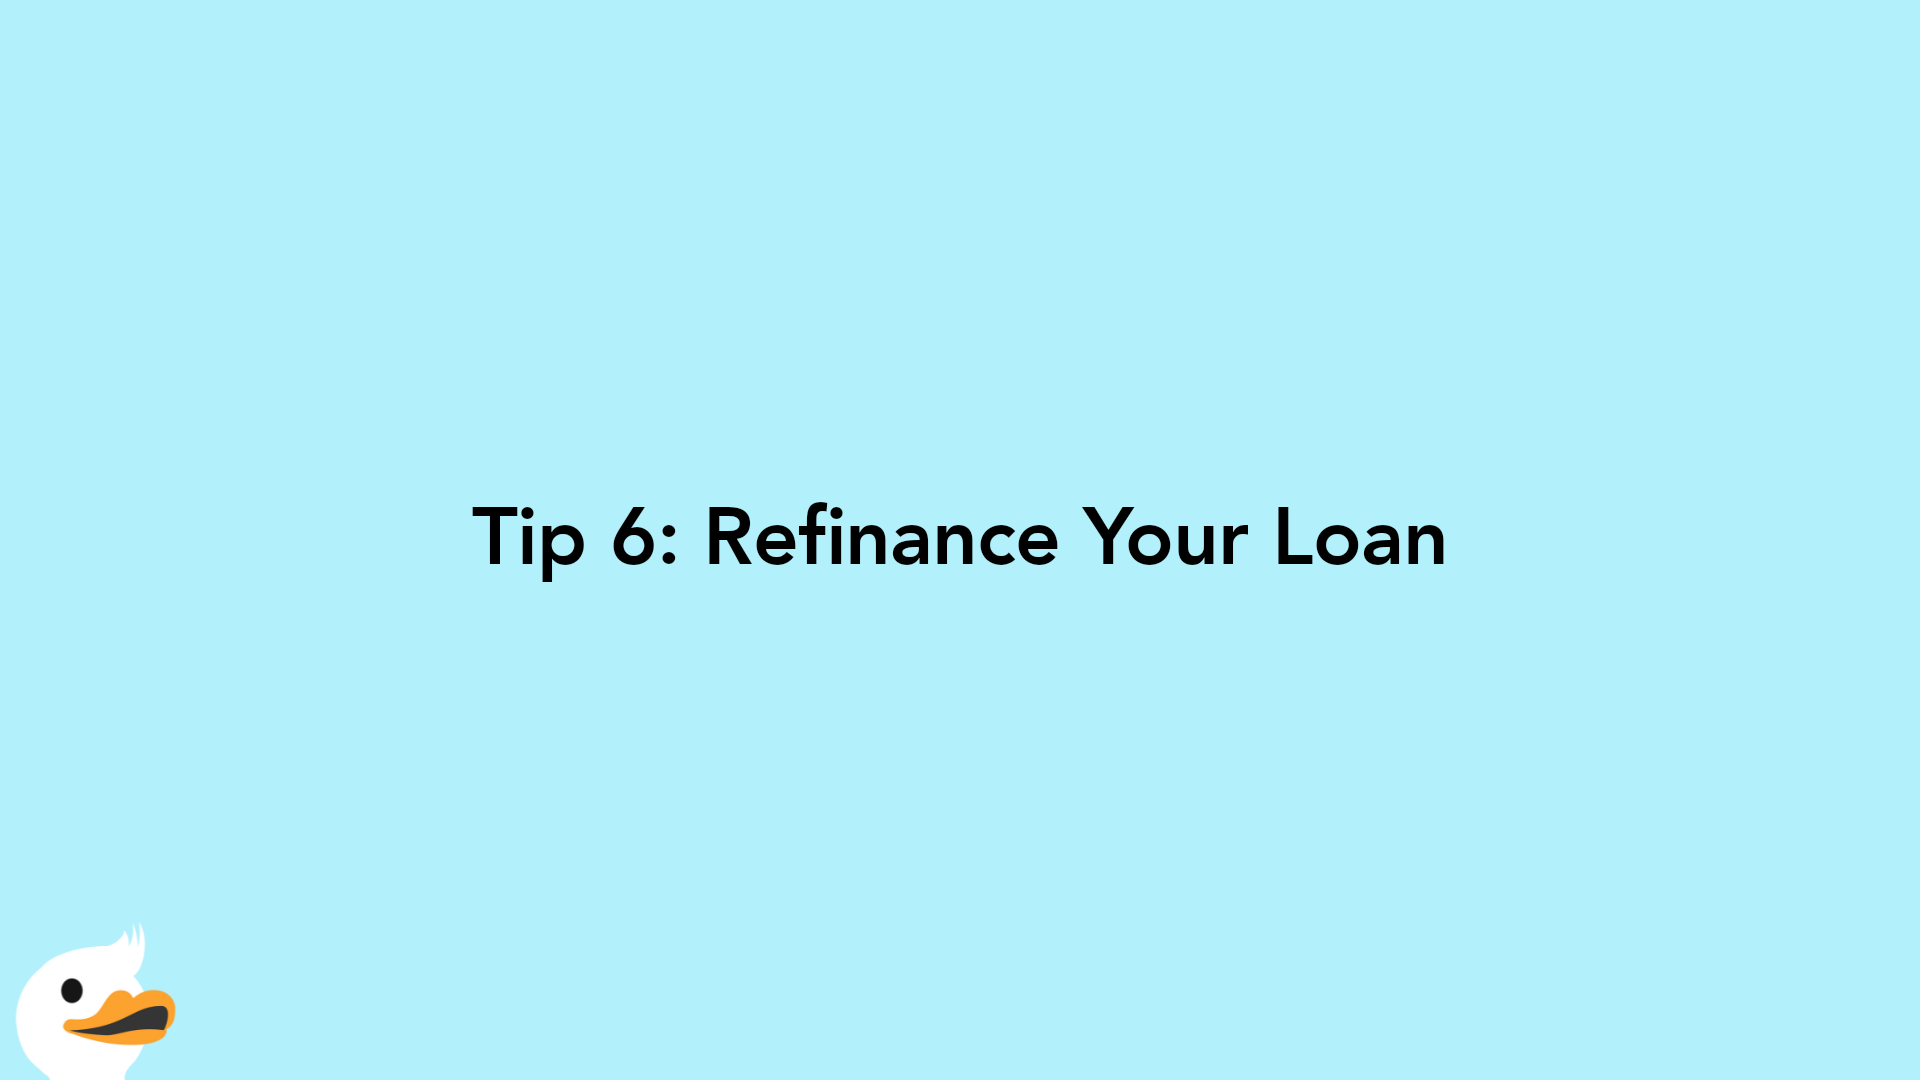 Tip 6: Refinance Your Loan